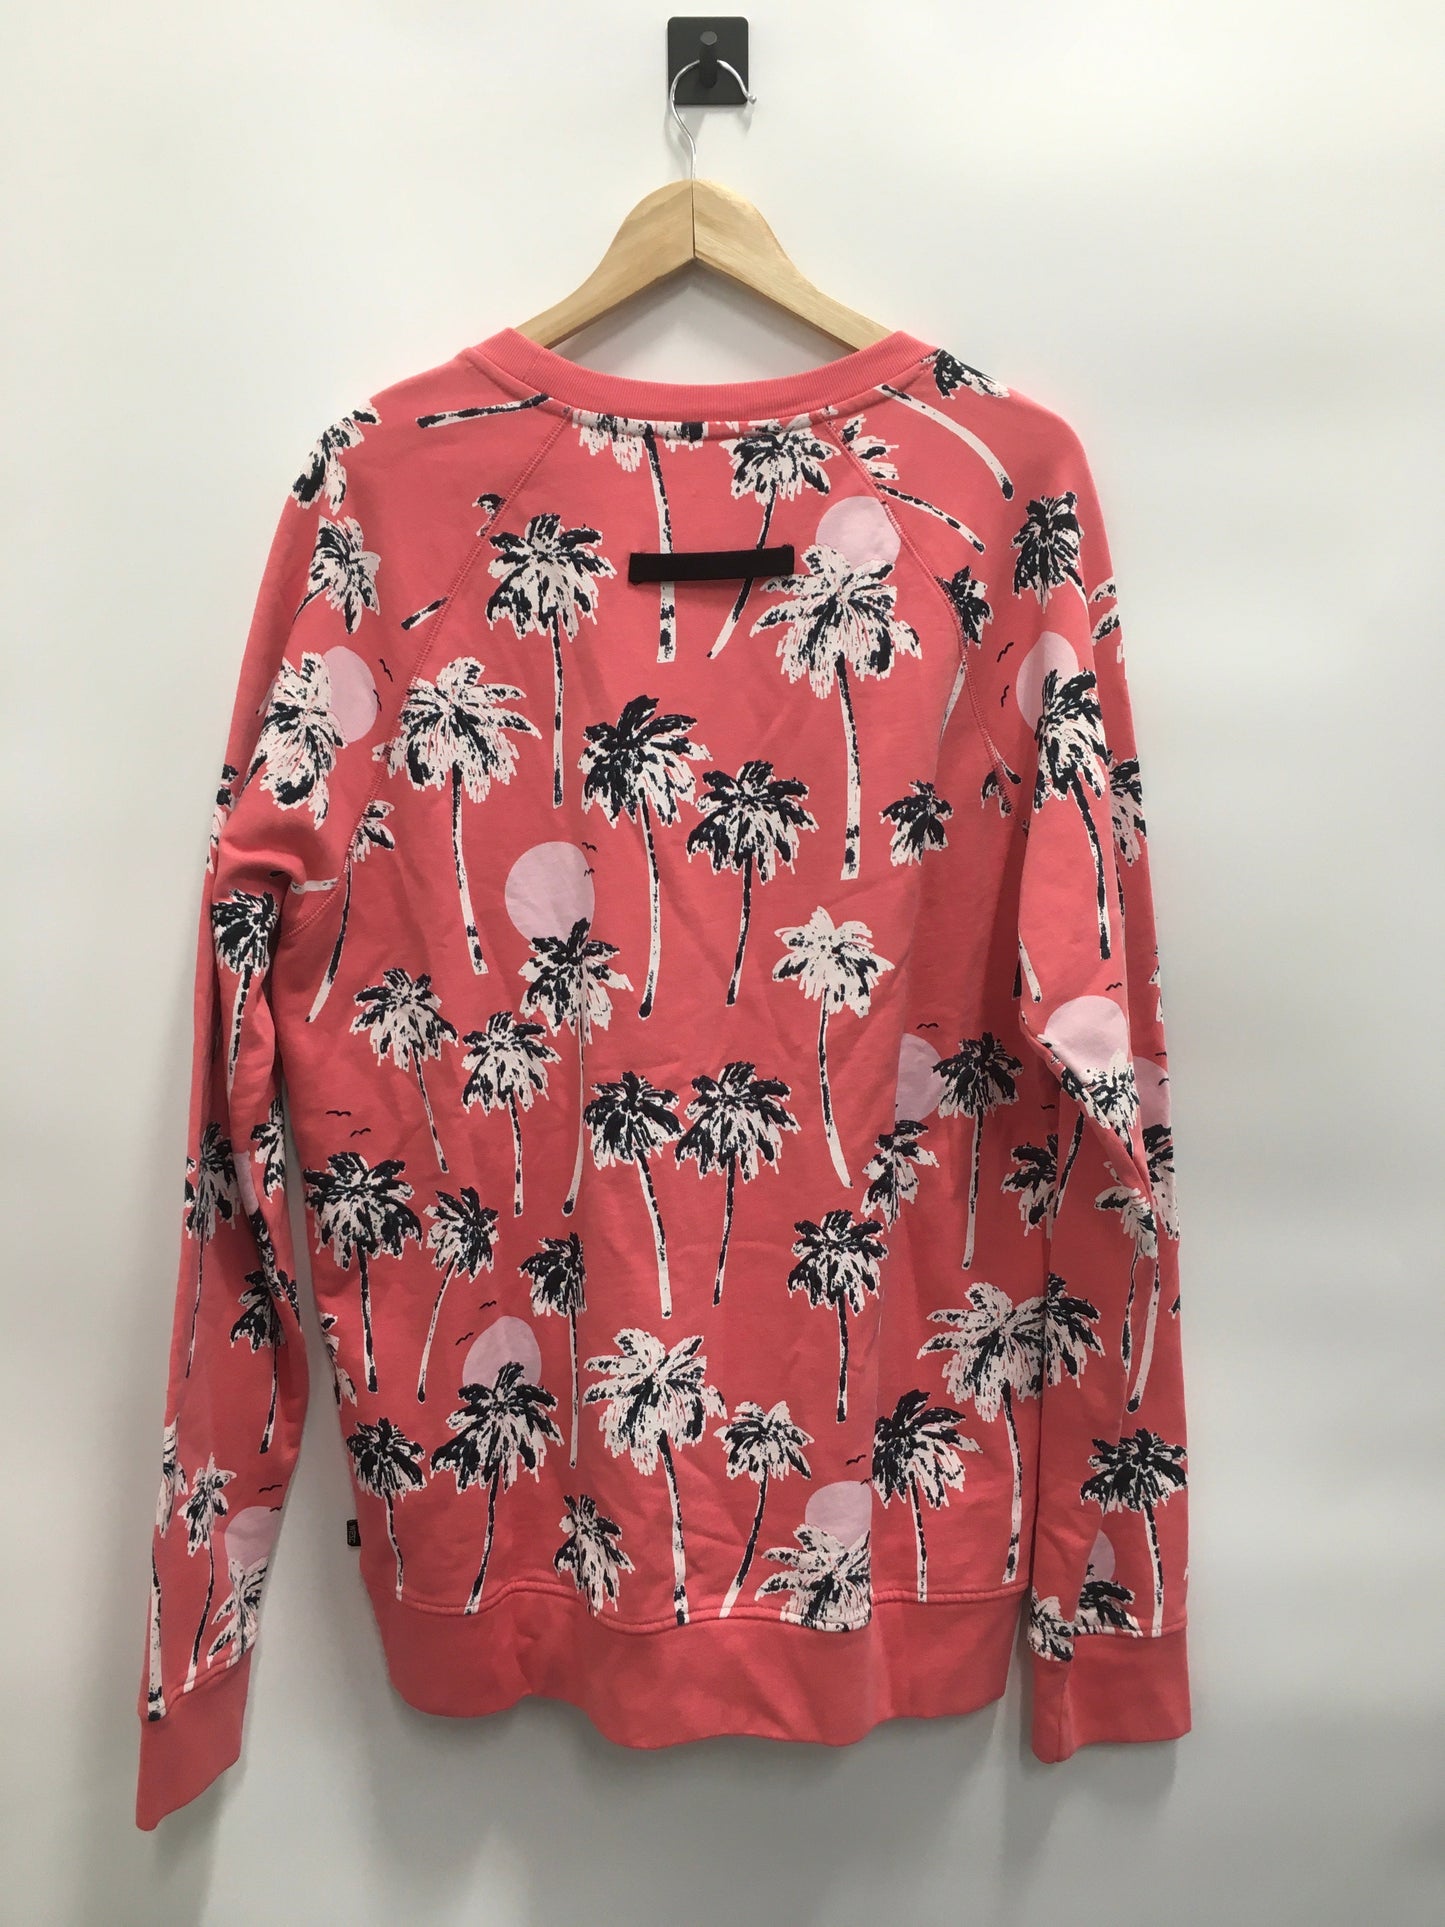 Sweatshirt Crewneck By Clothes Mentor  Size: Xxl